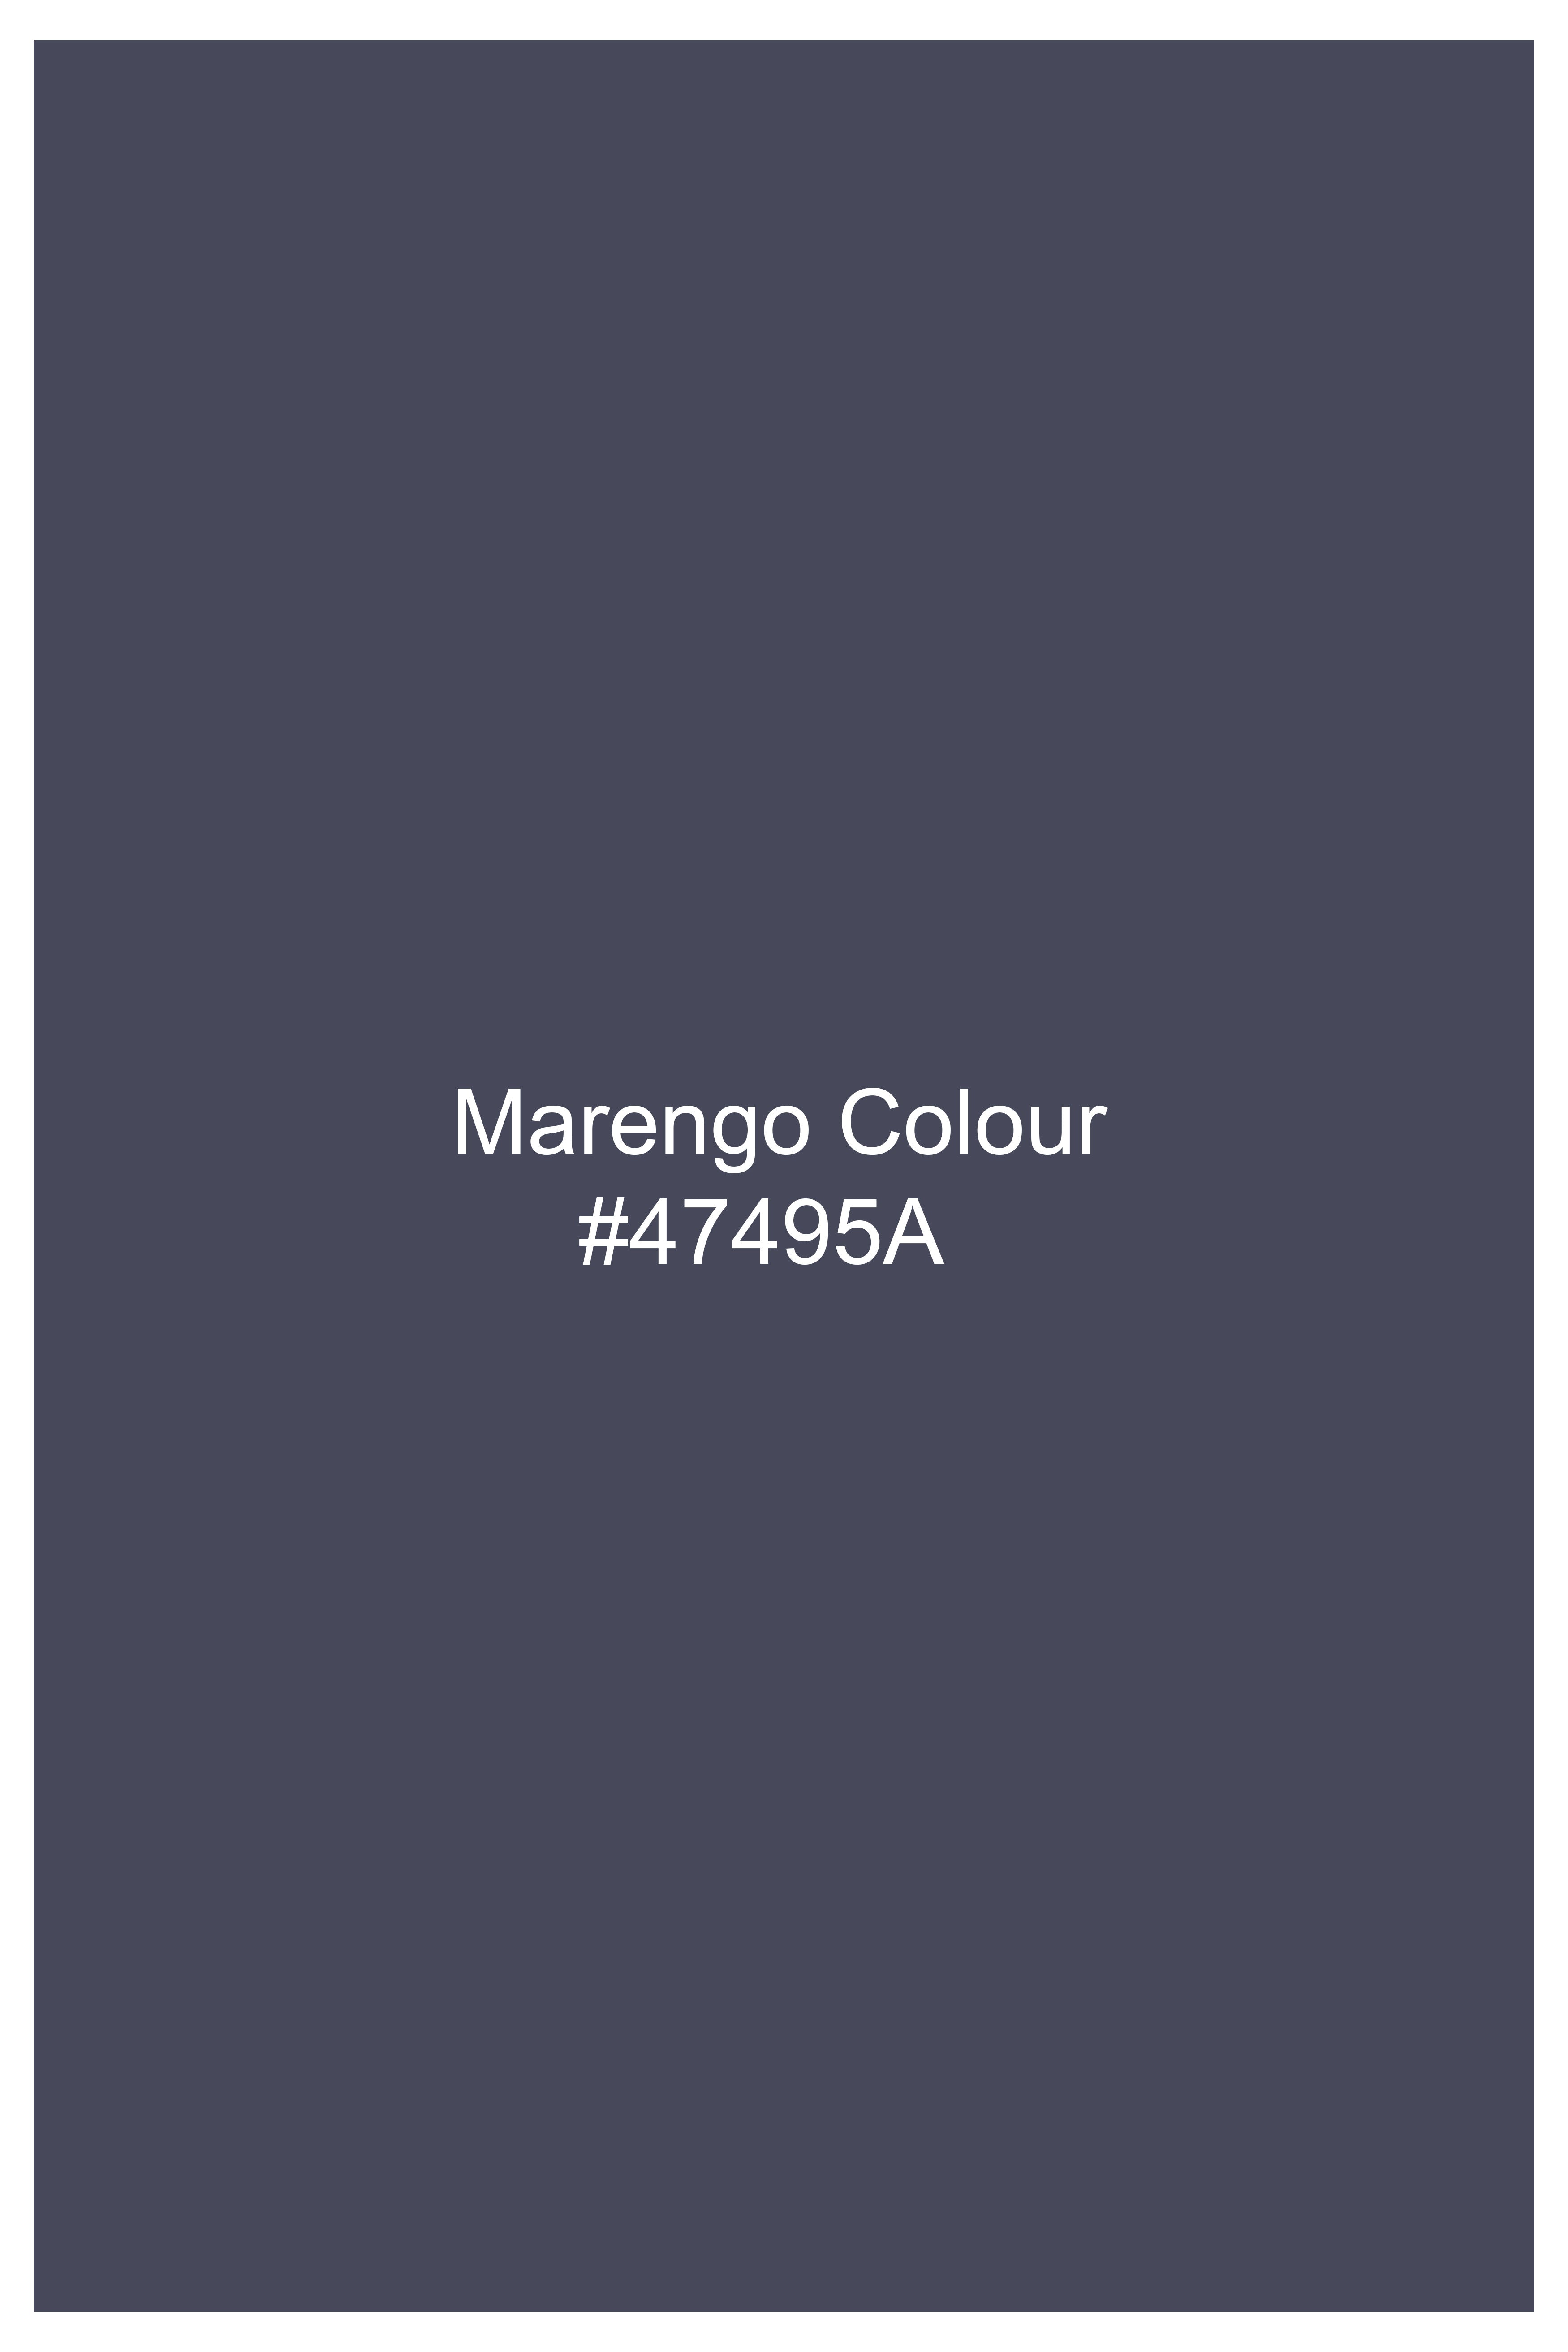 Marengo Gray with Horizontal Stitches Wool Rich Bandhgala Designer Blazer BL2973-BG-D168-36, BL2973-BG-D168-38, BL2973-BG-D168-40, BL2973-BG-D168-42, BL2973-BG-D168-44, BL2973-BG-D168-46, BL2973-BG-D168-48, BL2973-BG-D168-50, BL2973-BG-D168-52, BL2973-BG-D168-54, BL2973-BG-D168-56, BL2973-BG-D168-58, BL2973-BG-D168-60